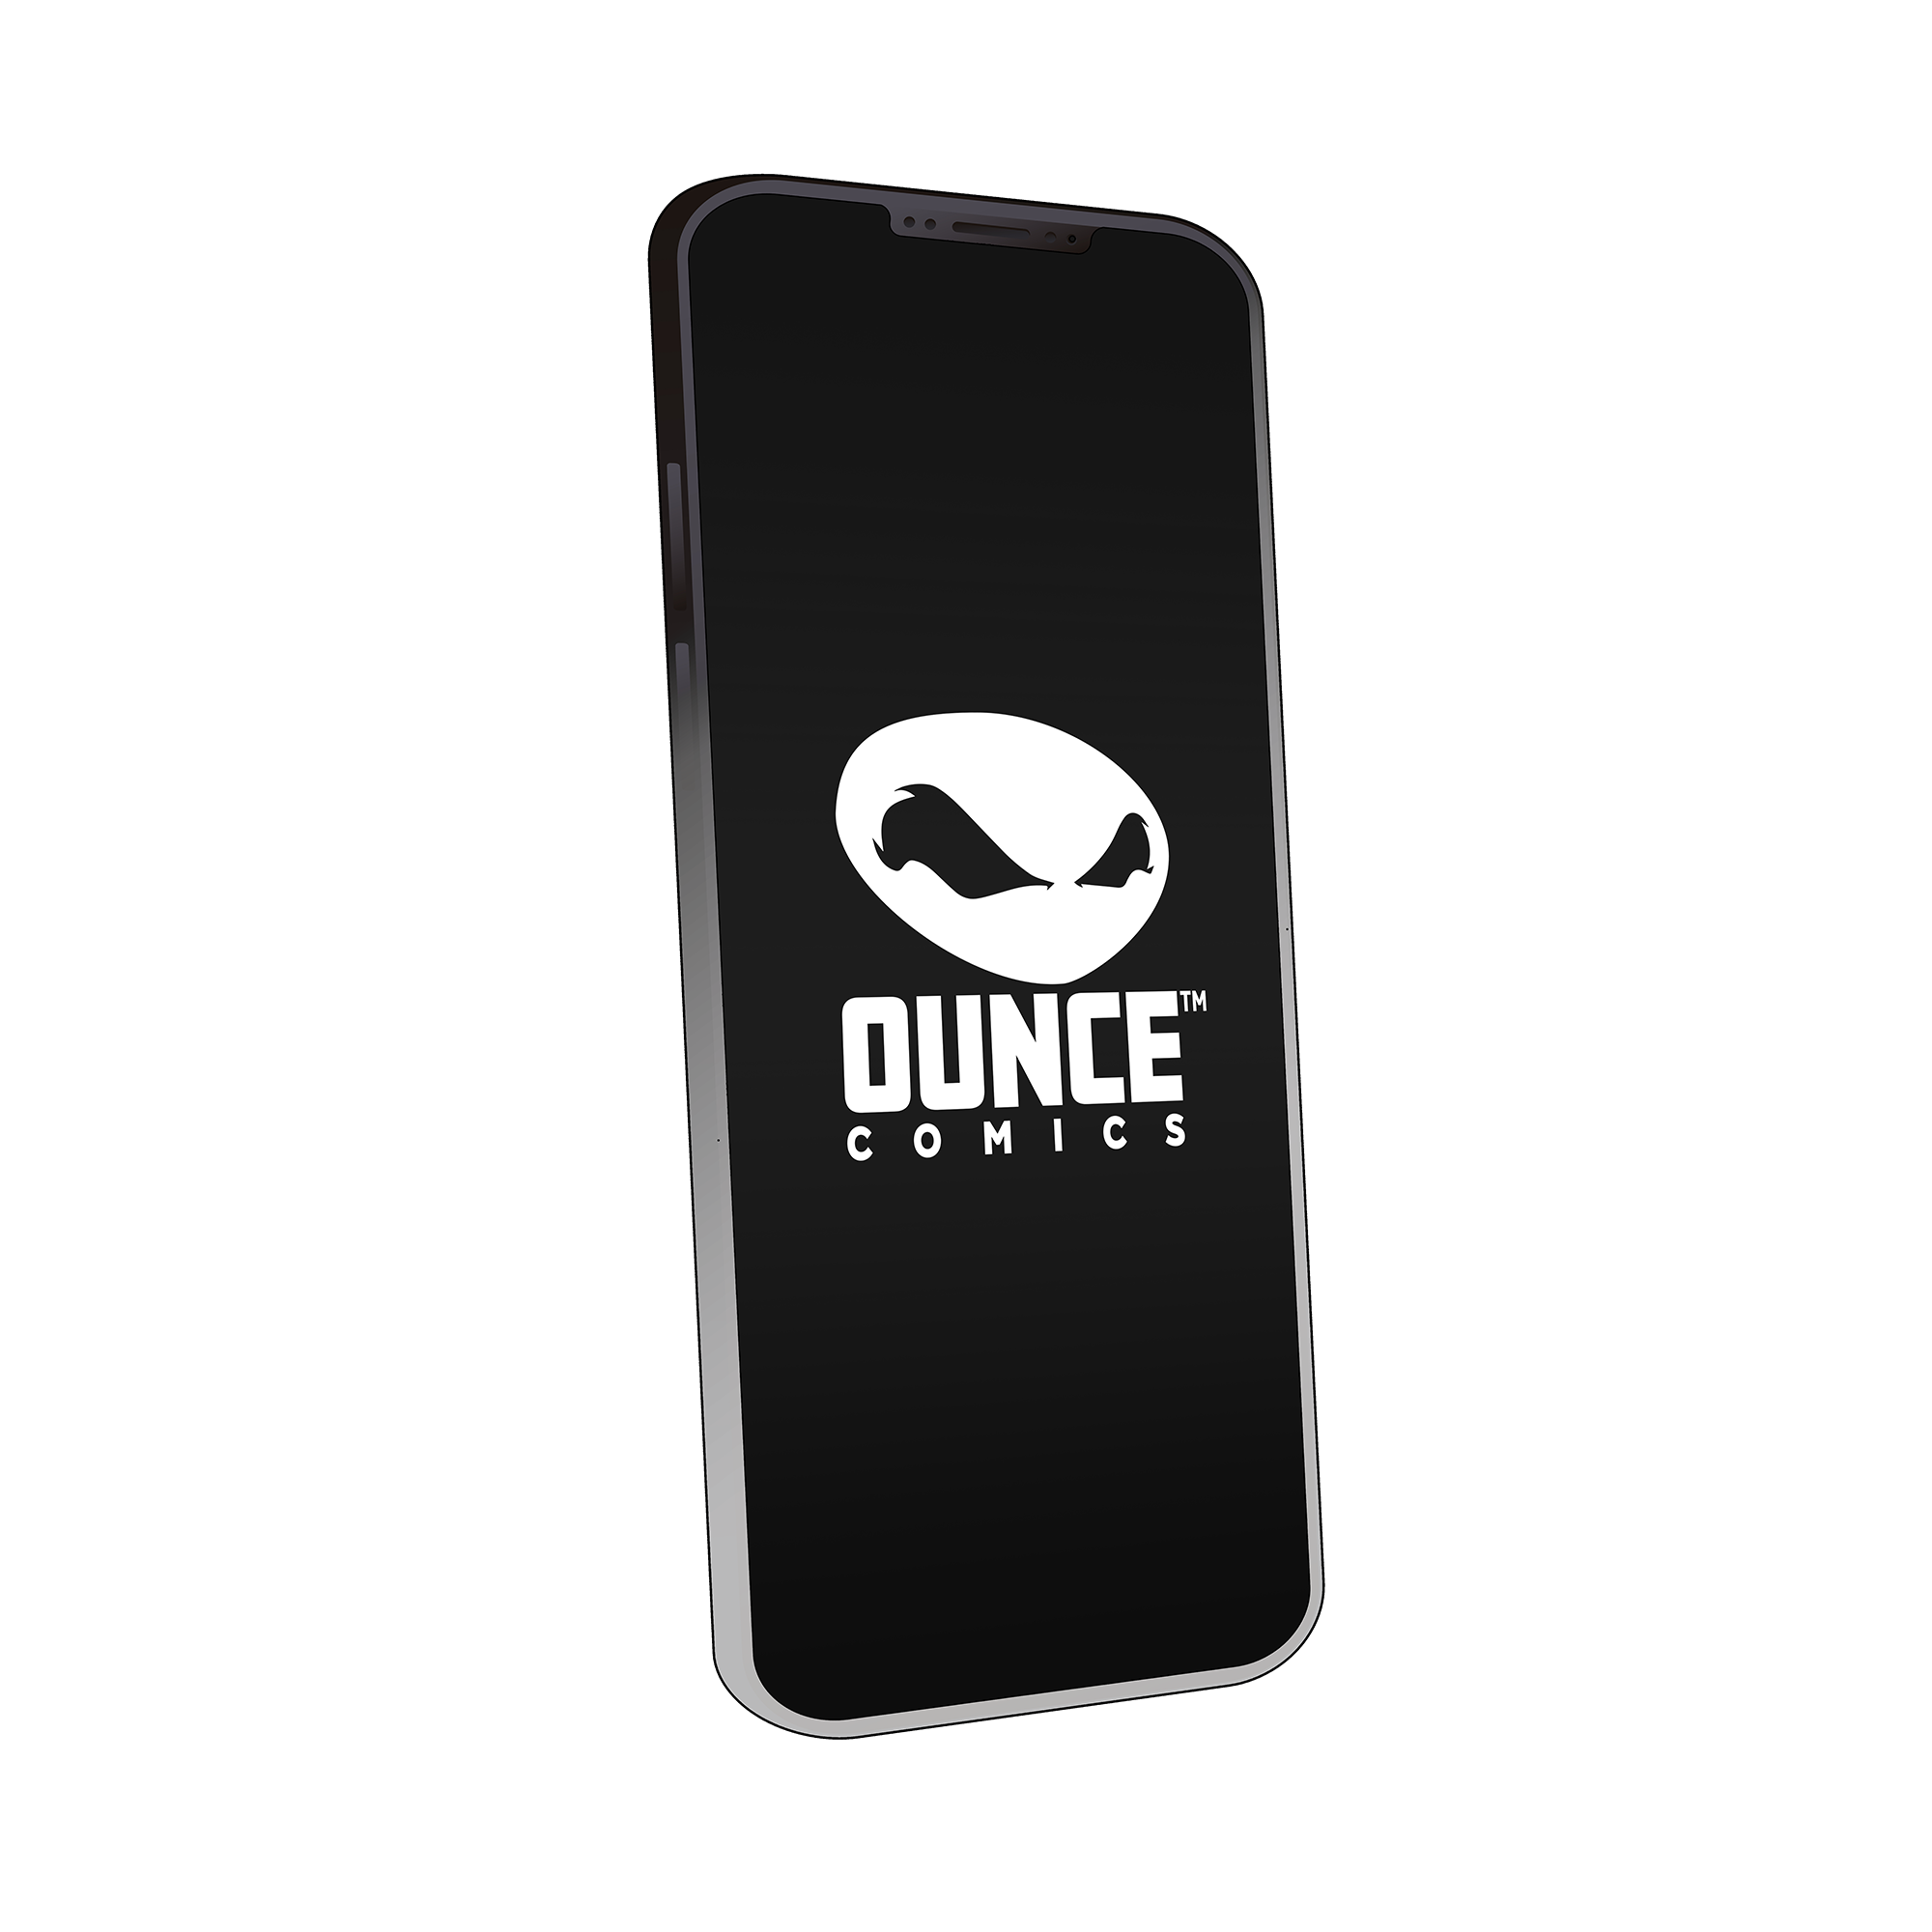 Ounce Comics Desktop & Mobile Background Pack